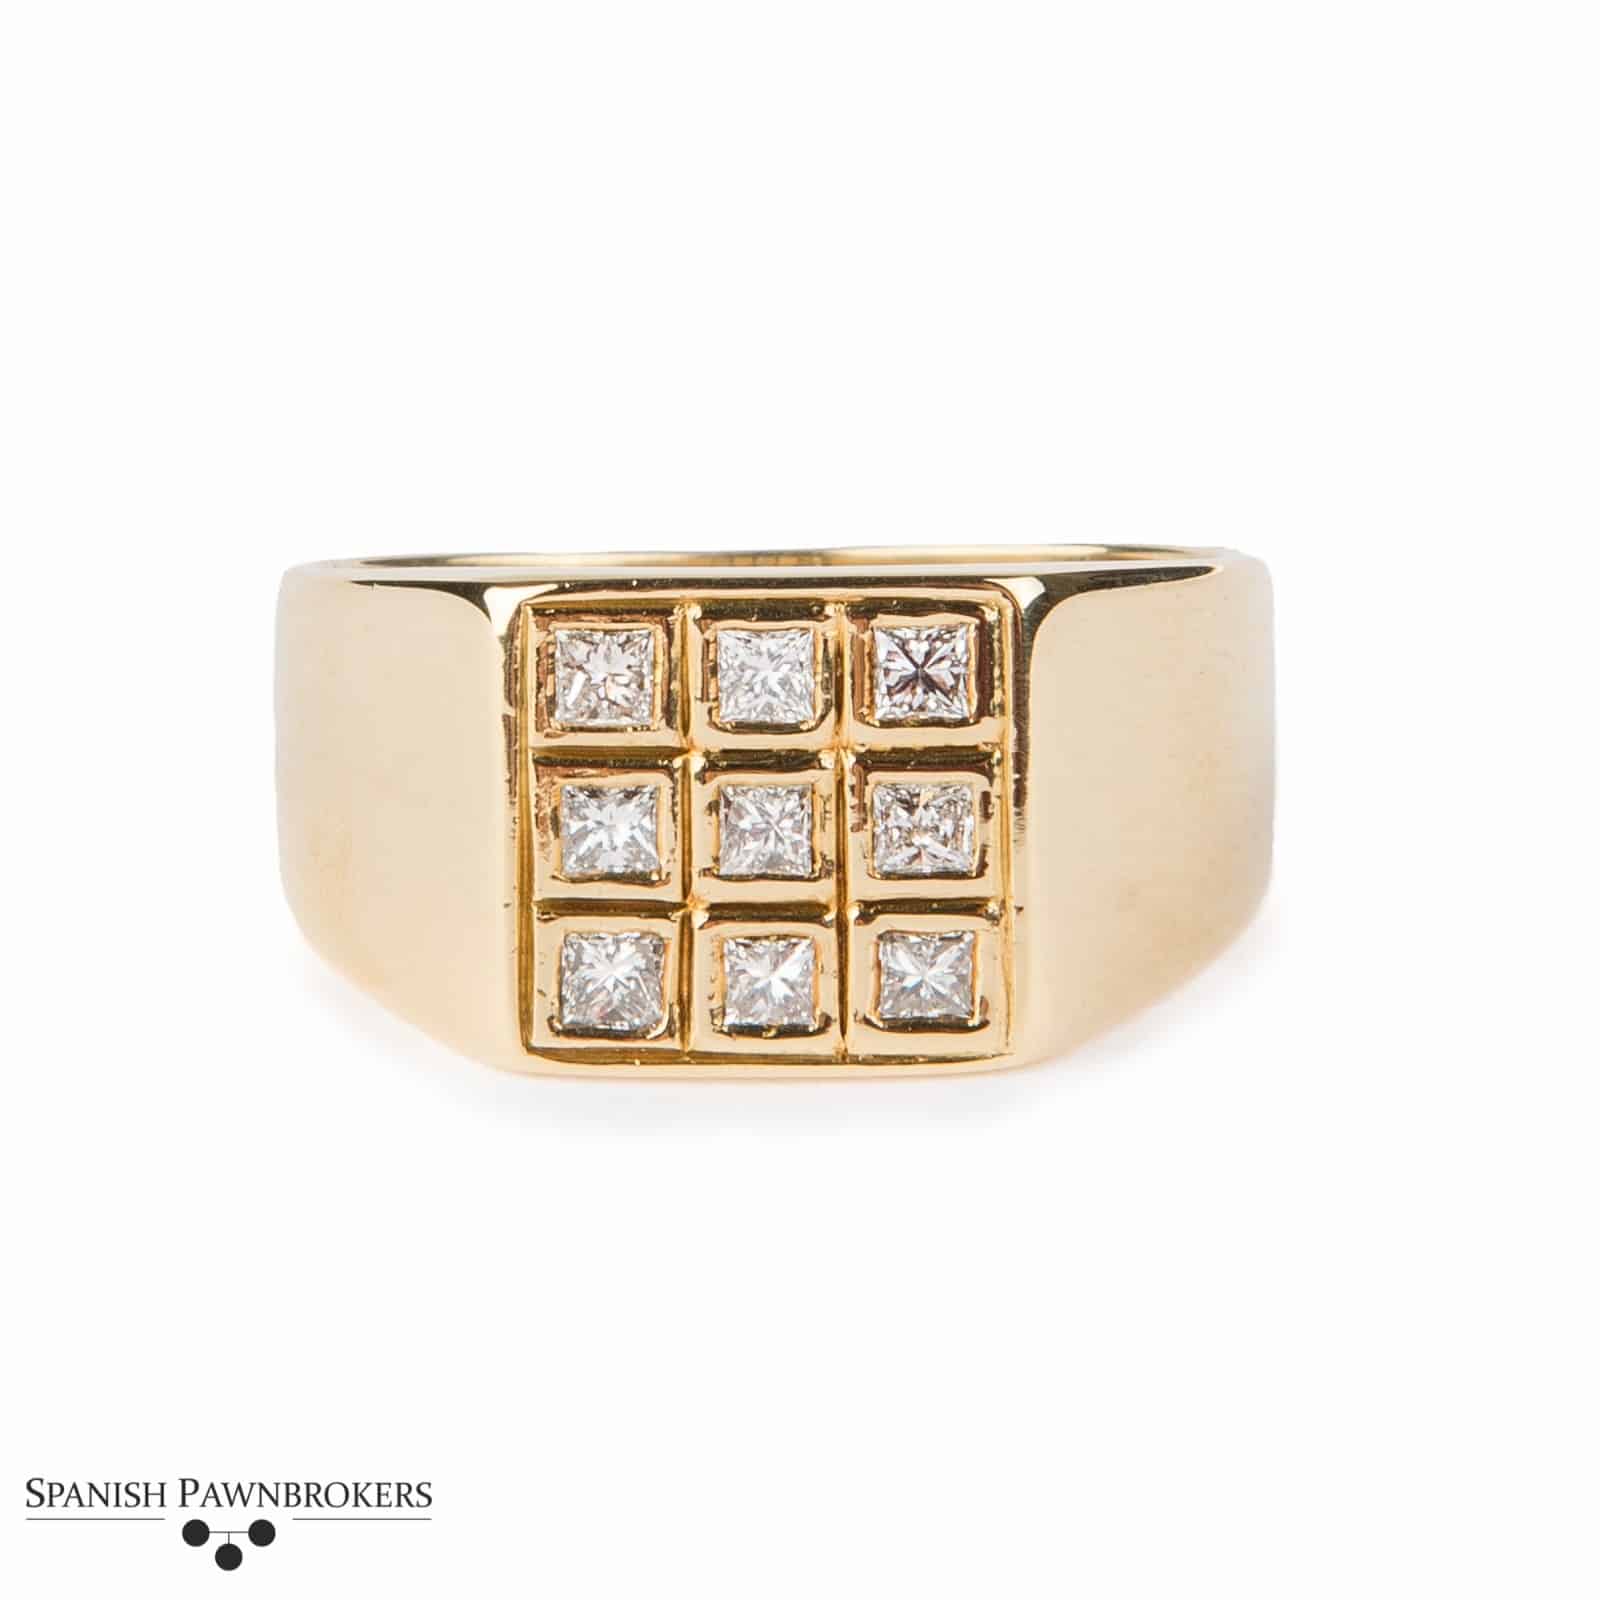 LBG British Made 18k Rose Gold ring with Natural Diamond Mens band Ring -  33 size options - Size 9.75 - Walmart.com